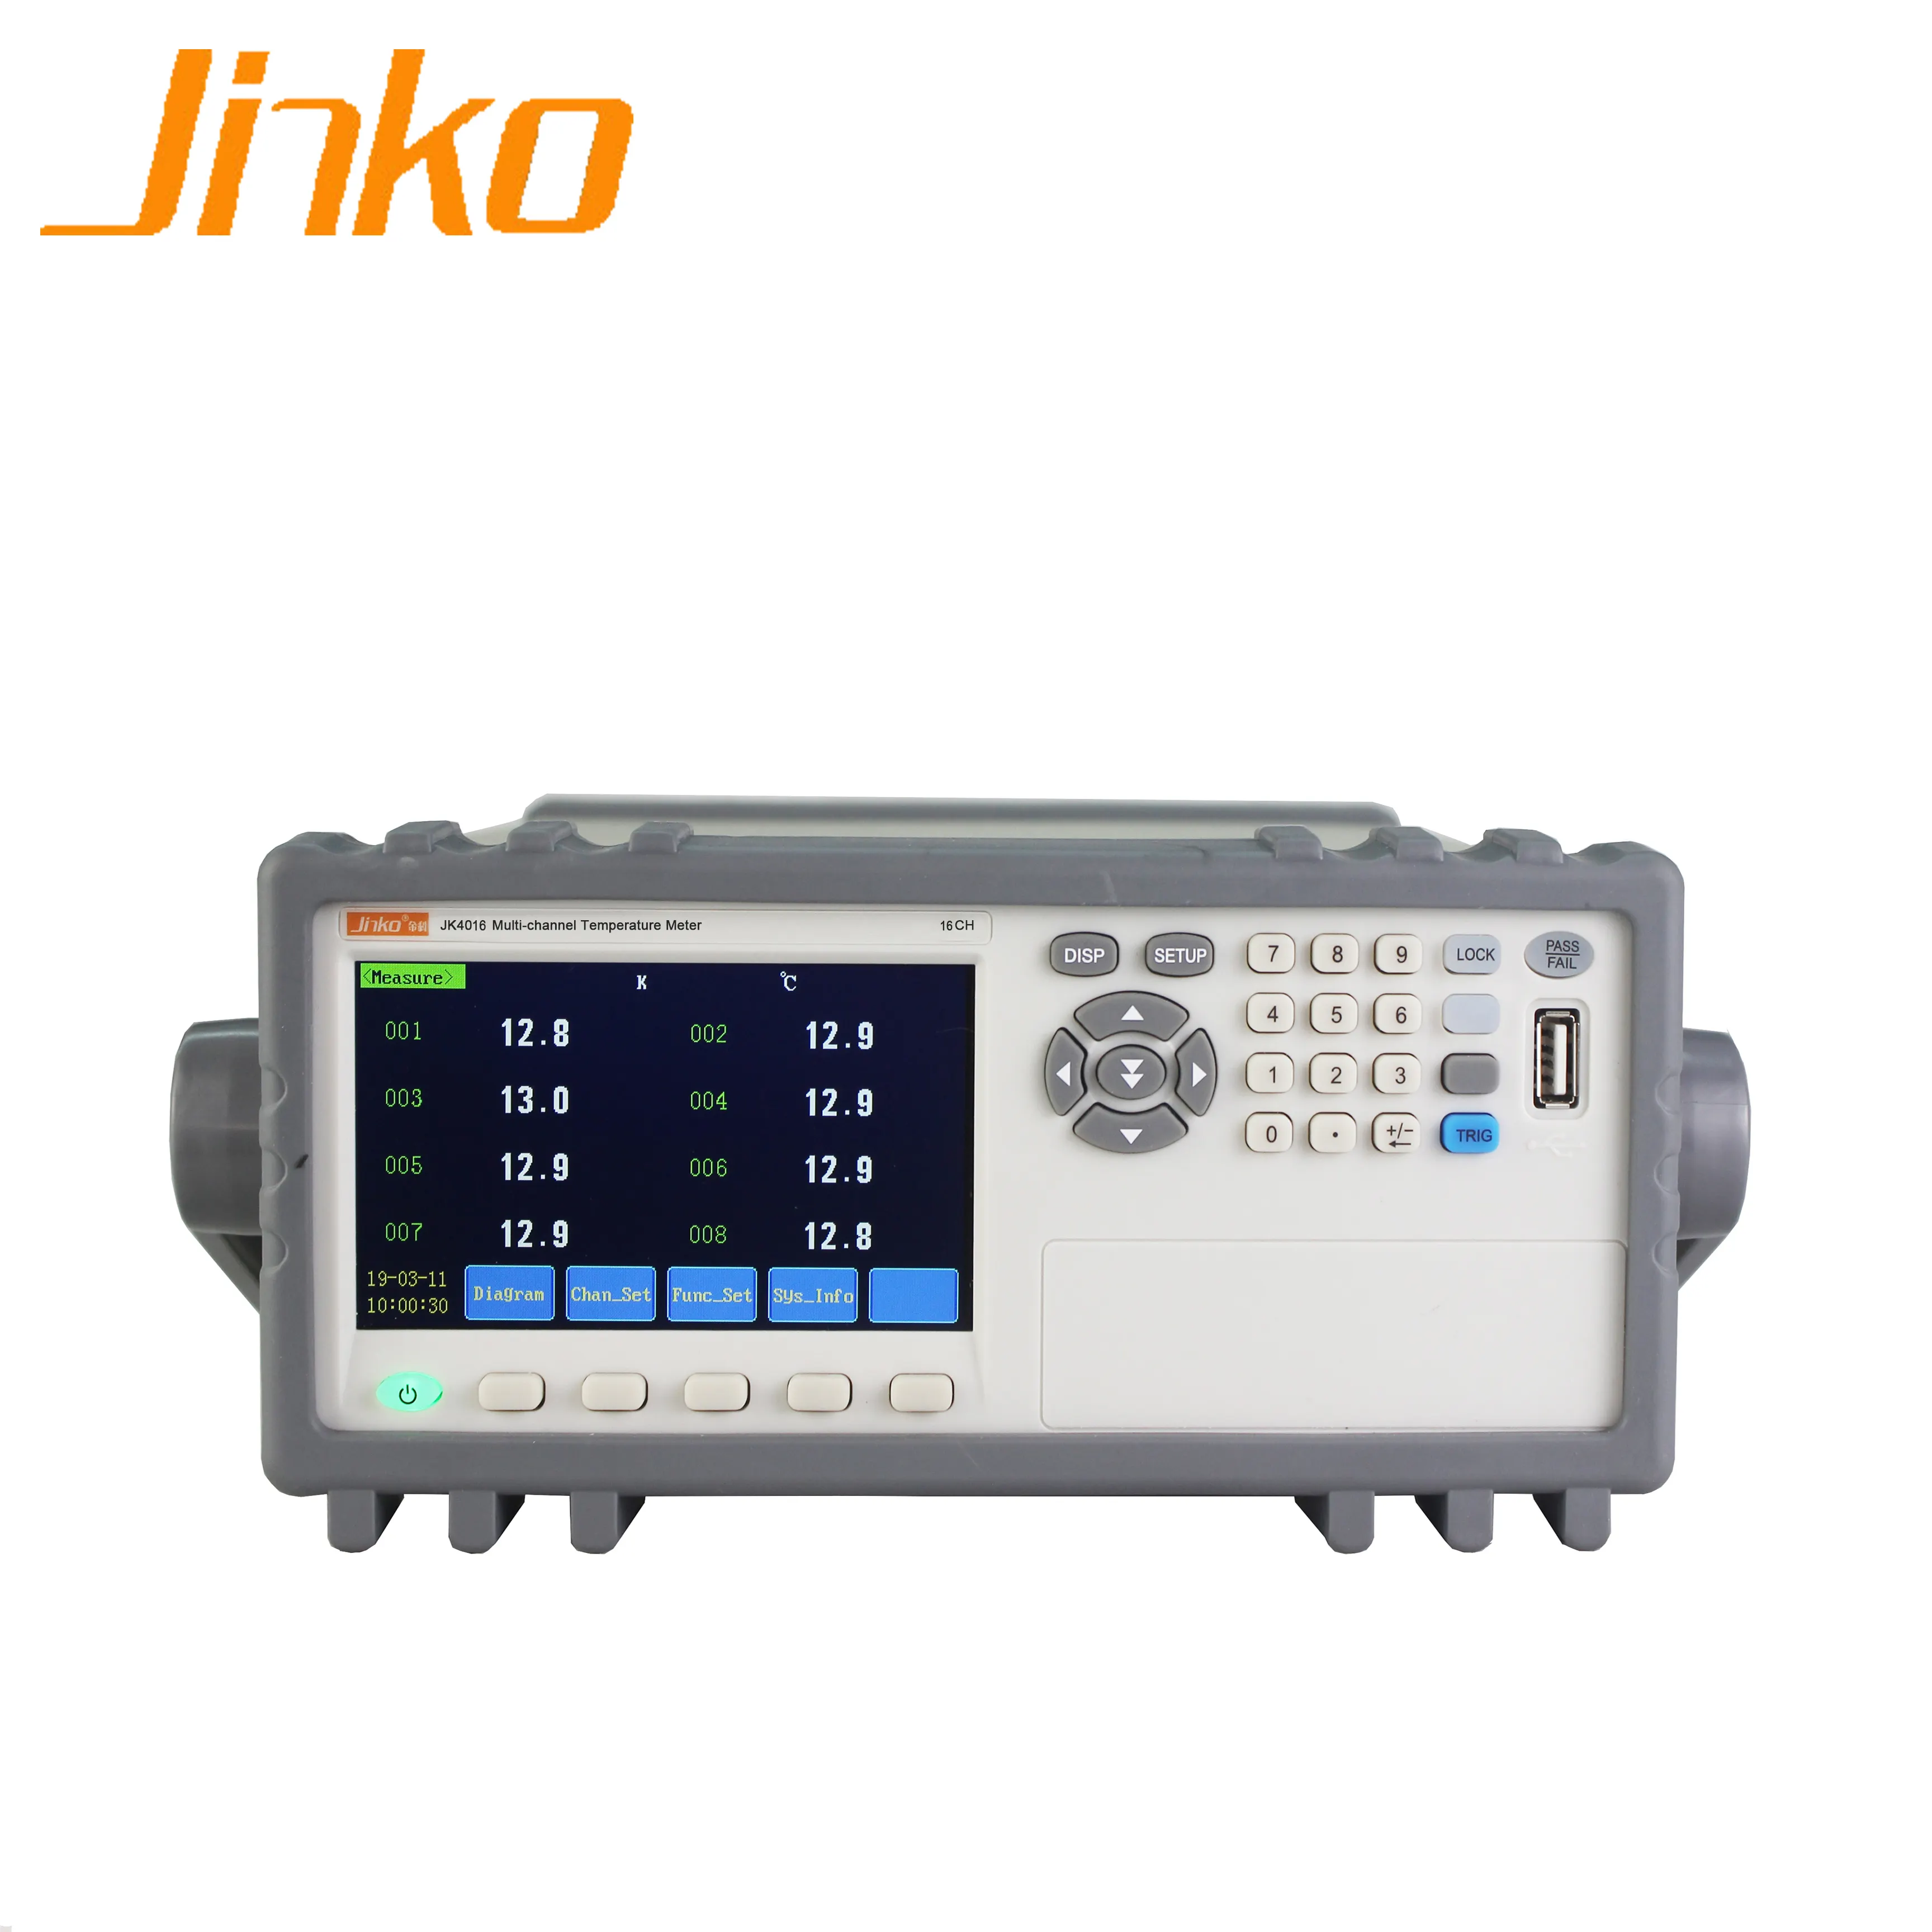 Jinko termômetro, alta qualidade multi canal temperatura jk4016 tela lcd medida faixa-200 a 1800 graus uso da indústria